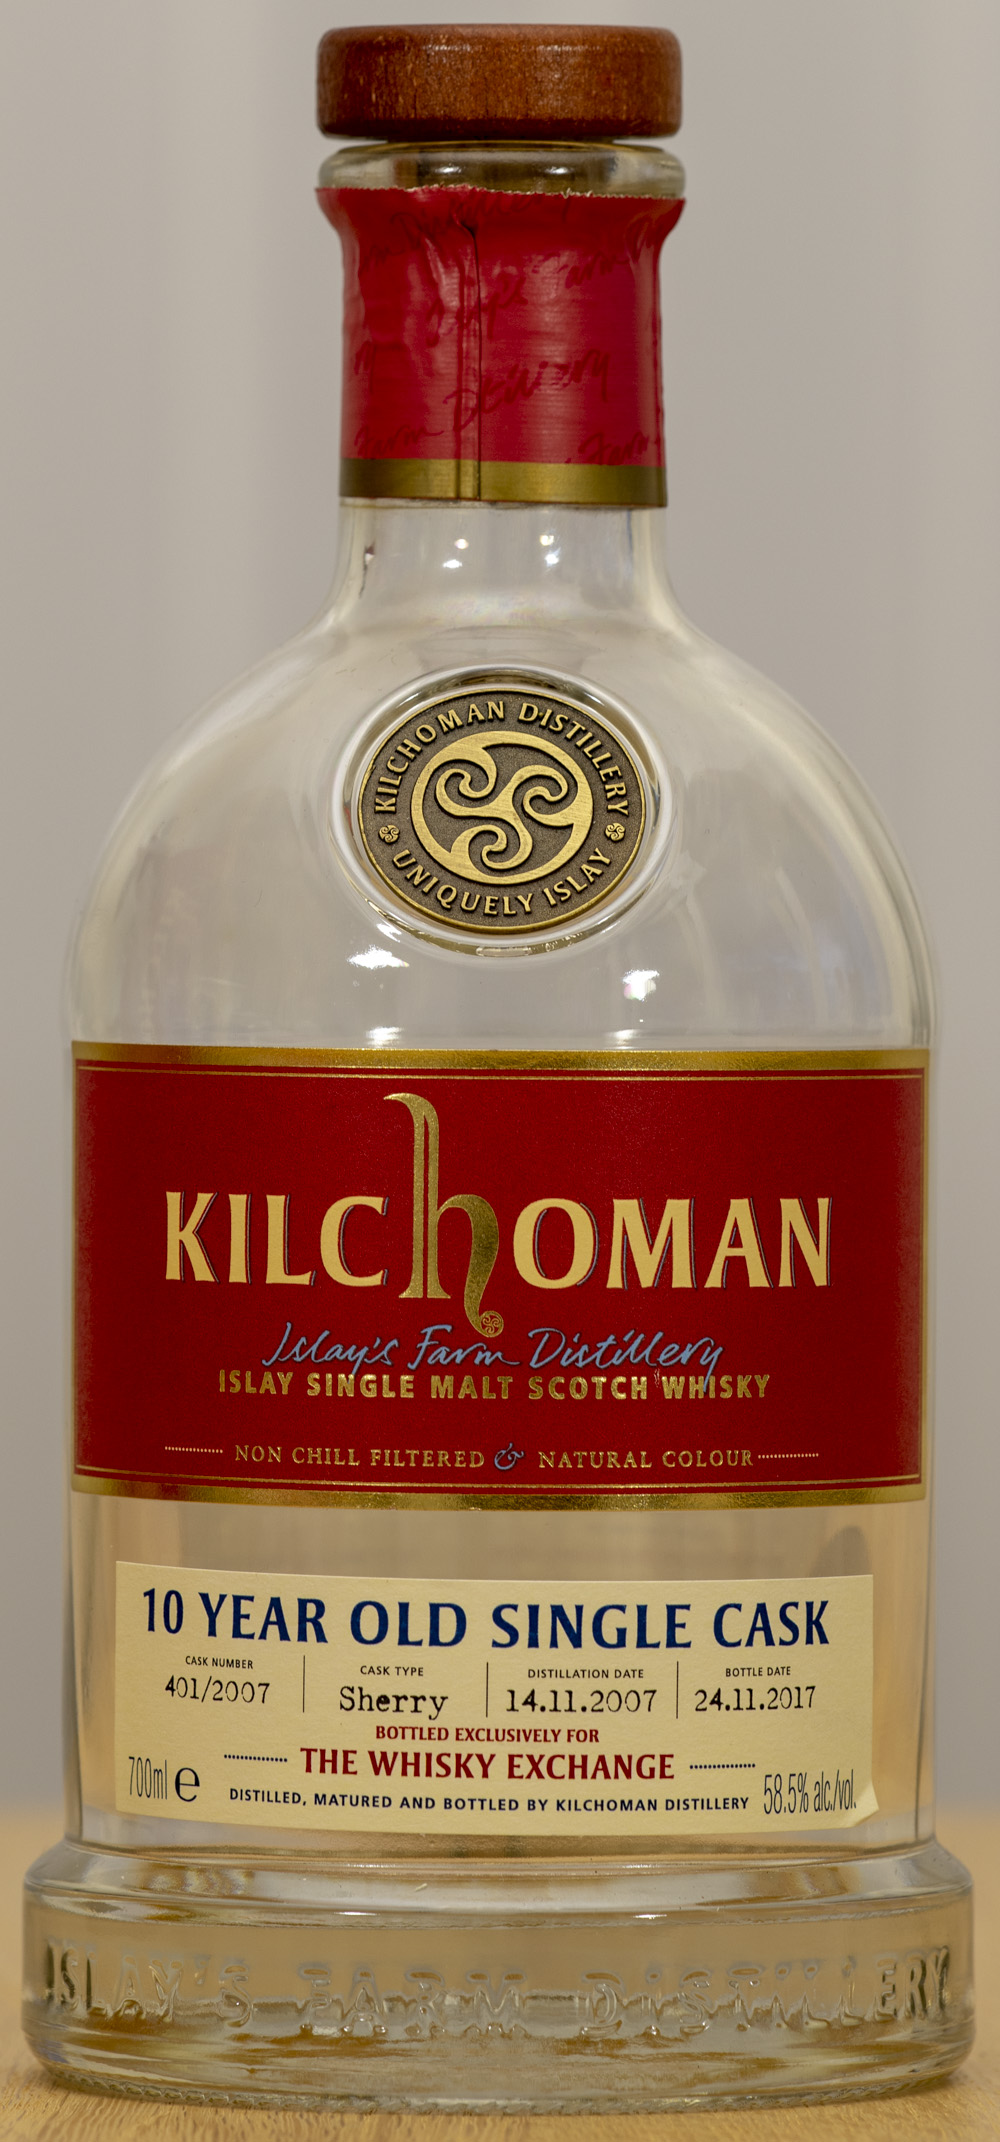 Billede: PHC_1546 - Kilchoman 10 year Whisky Exchange - bottle front.jpg